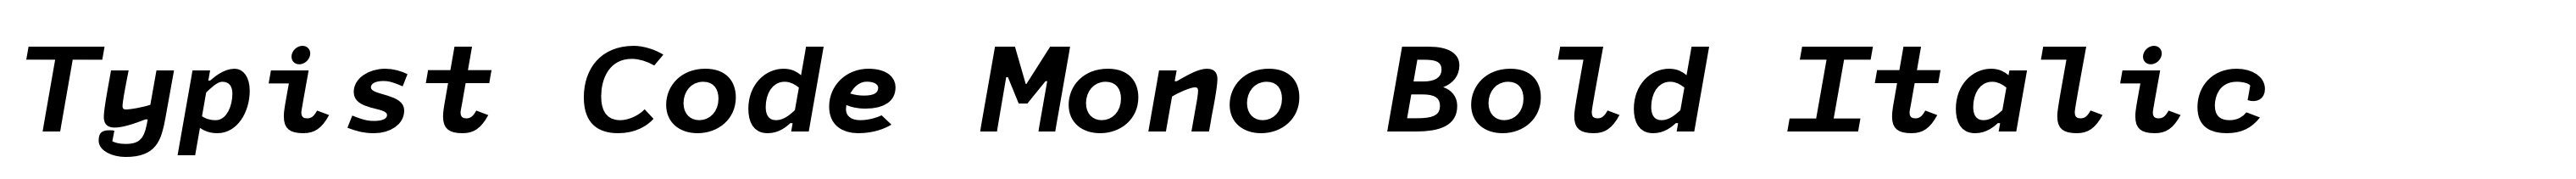 Typist Code Mono Bold Italic